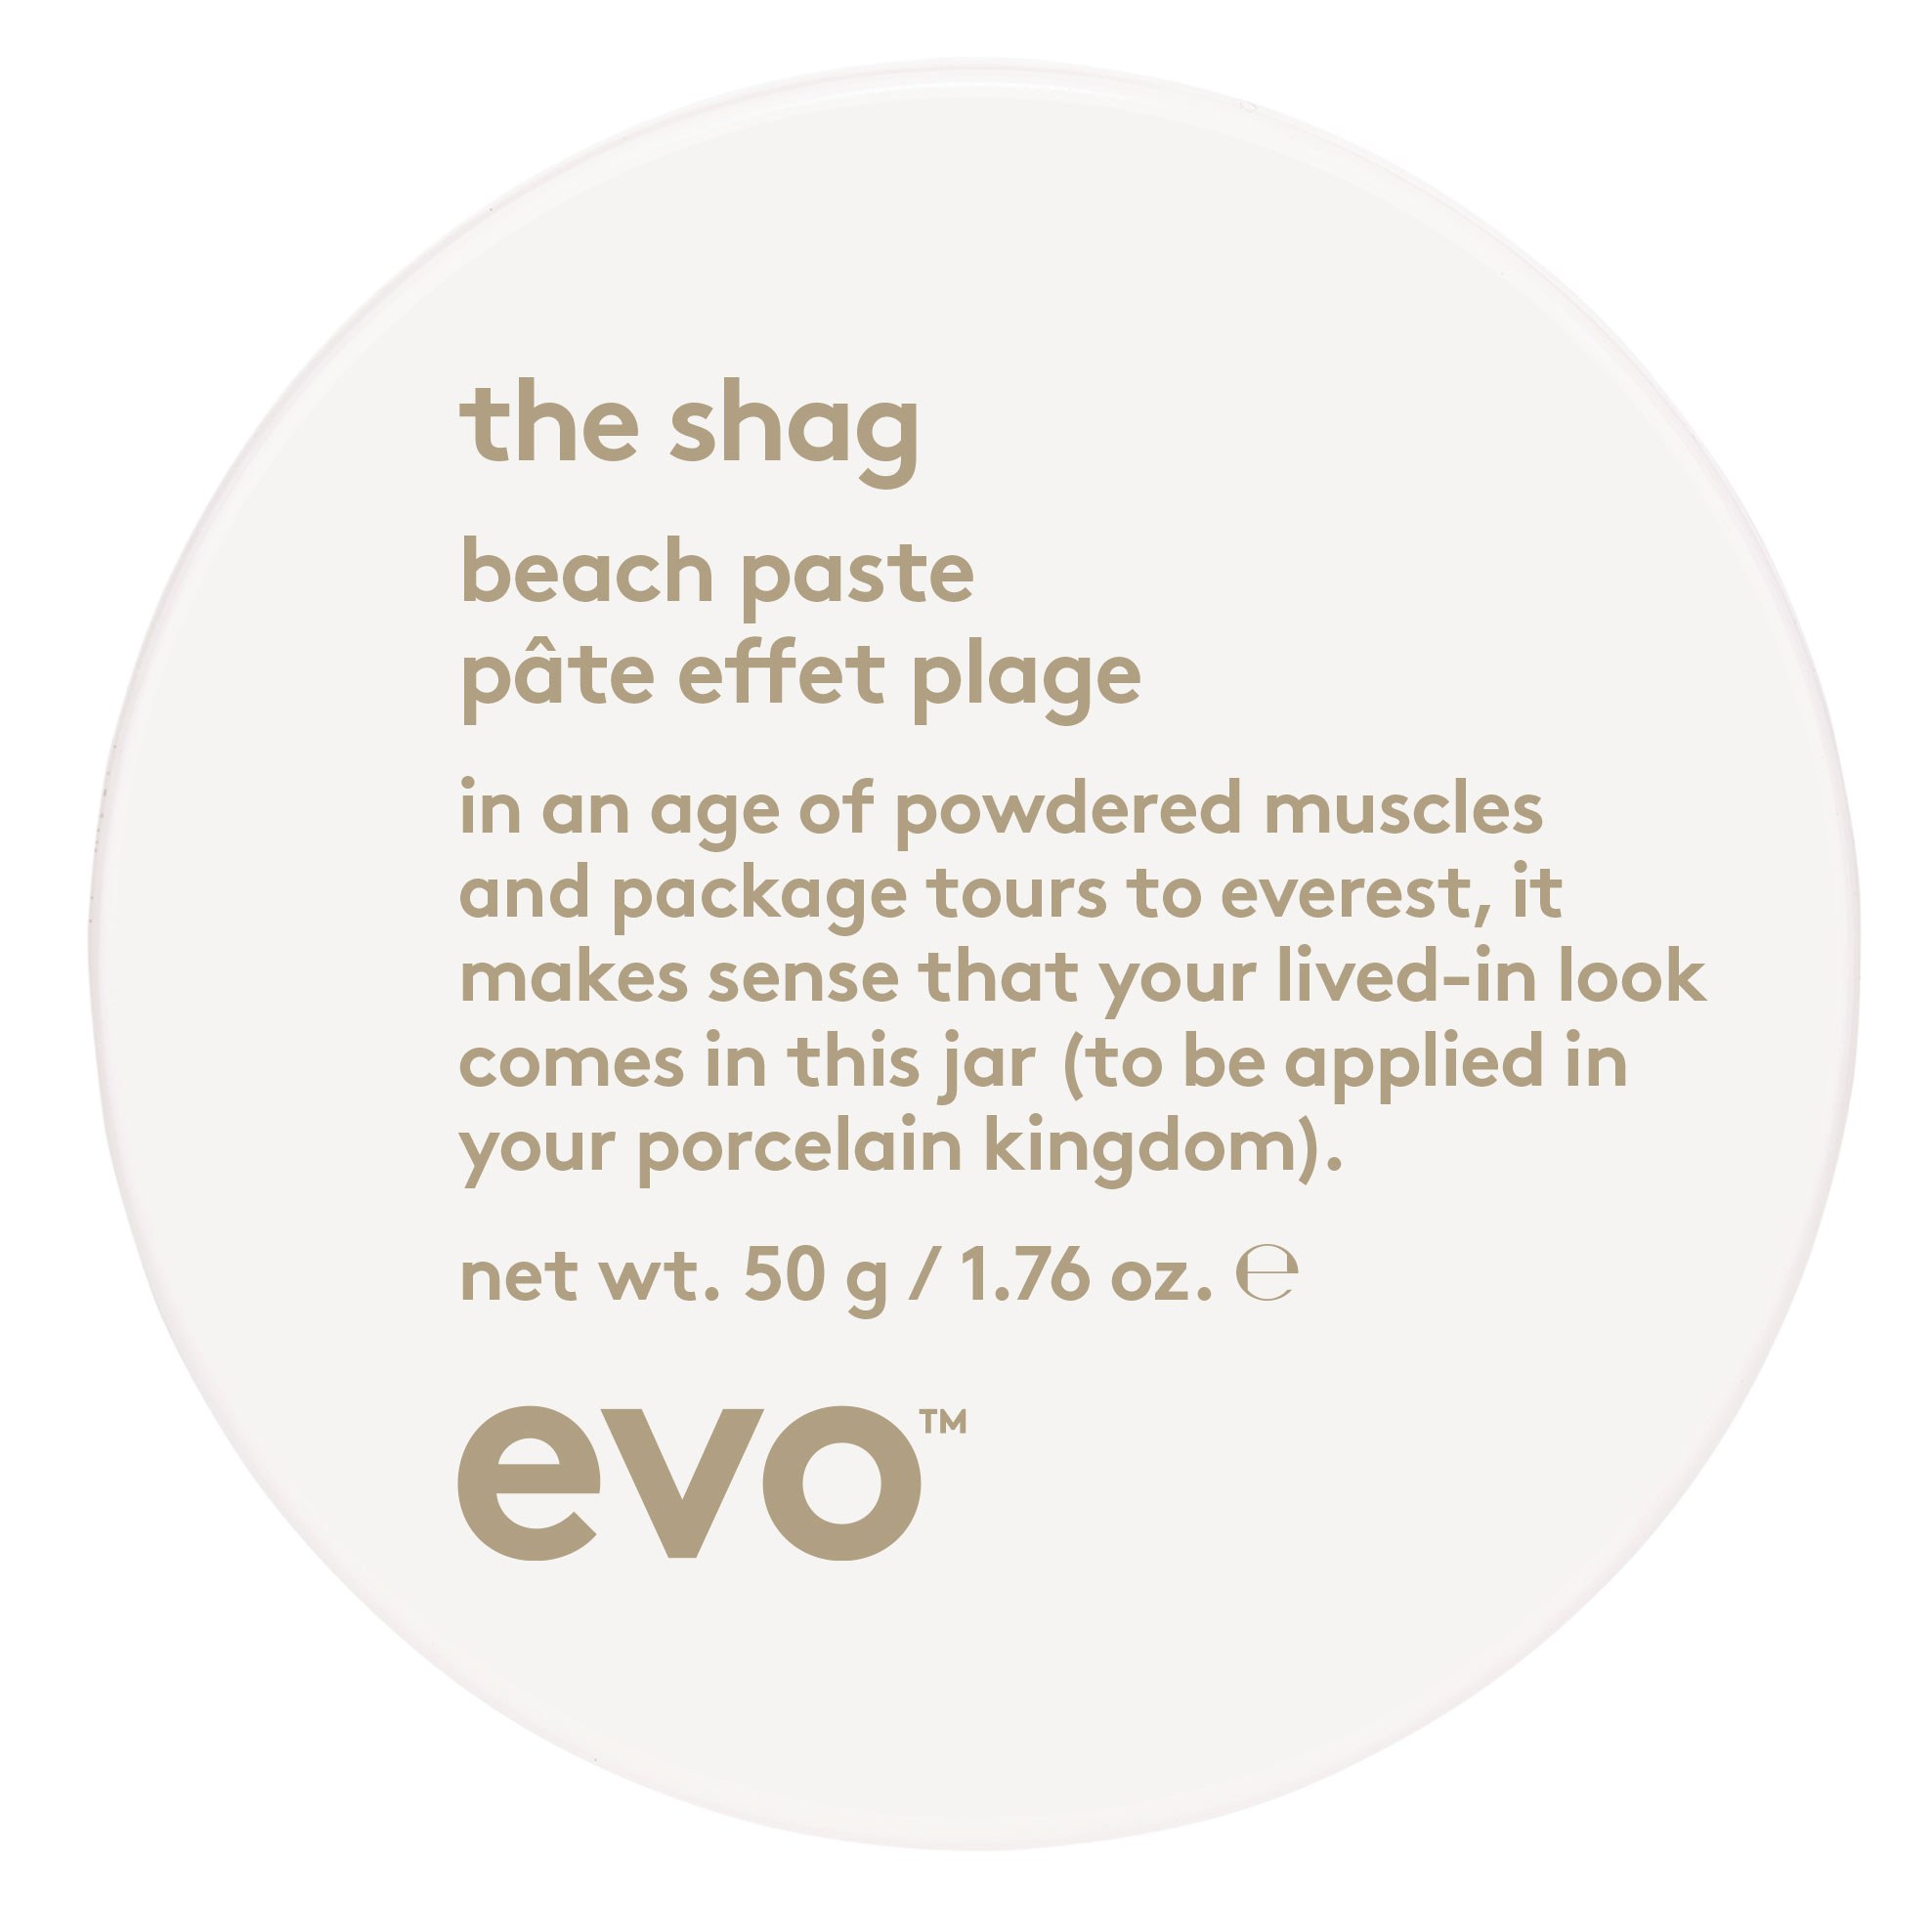 evo styling: the shag beach paste